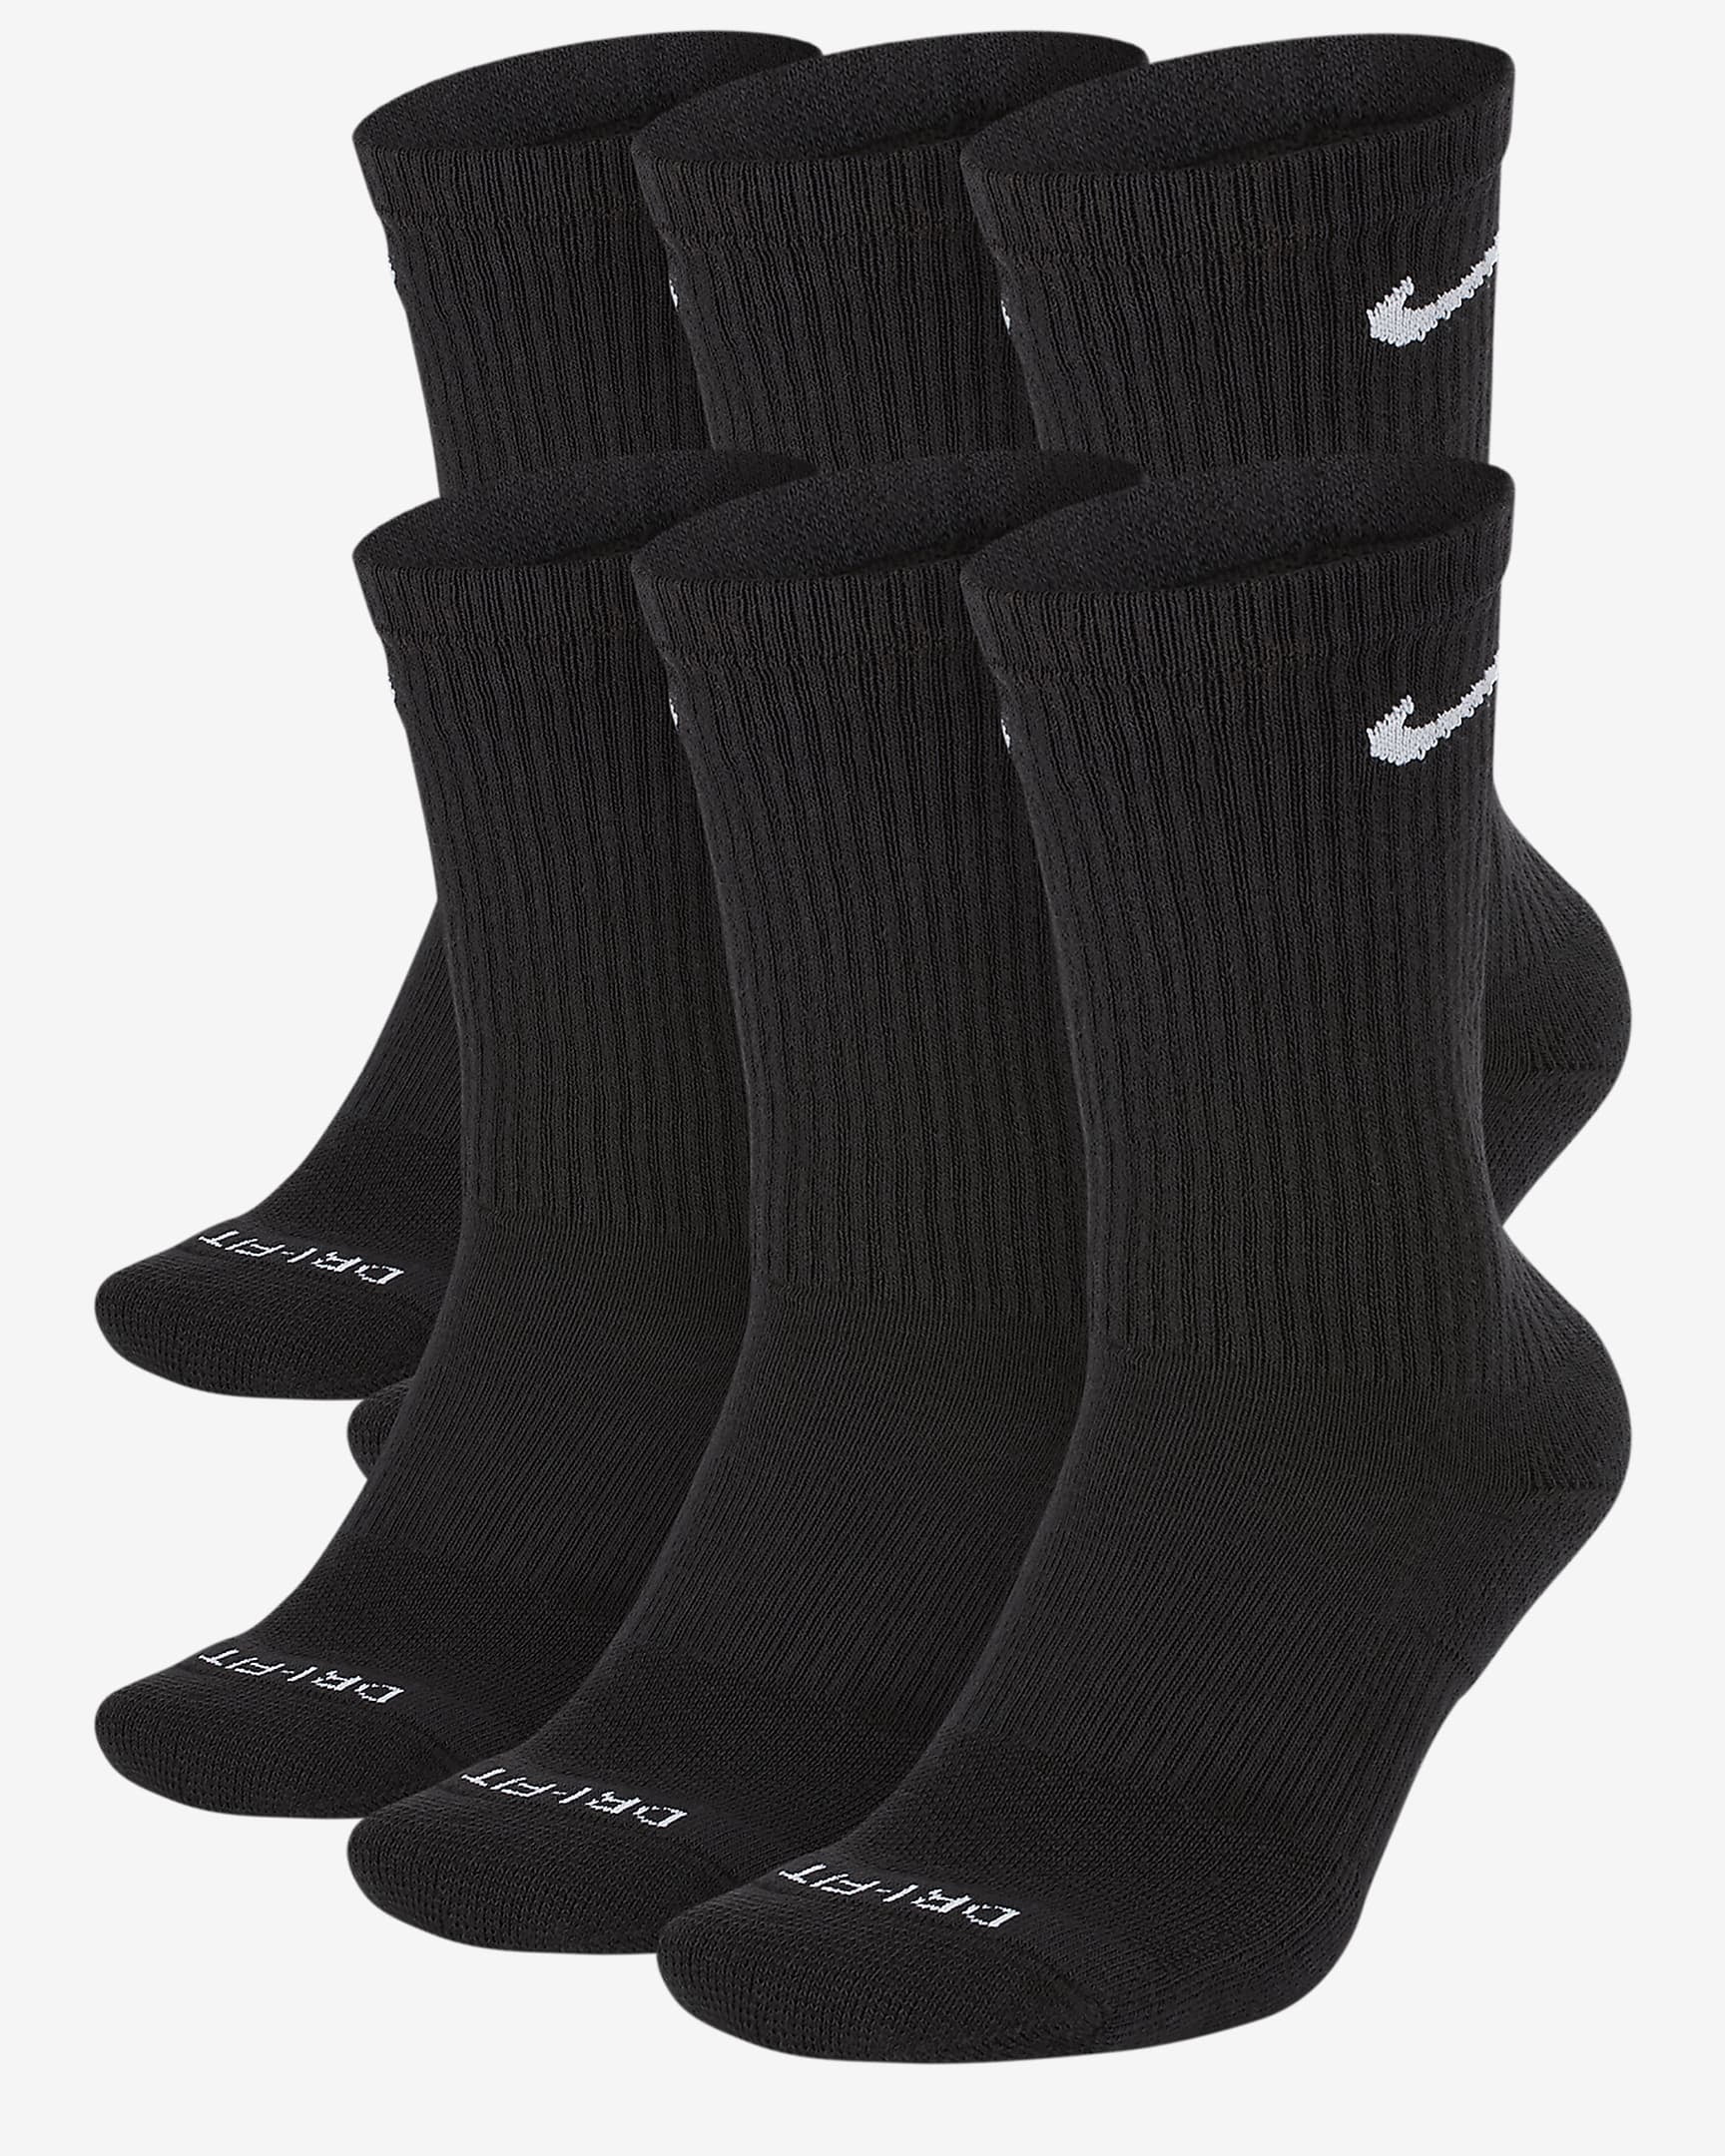 ik klaag Vechter Pijler Nike Everyday Plus Cushioned Training Crew Socks (6 Pack) - Walmart.com